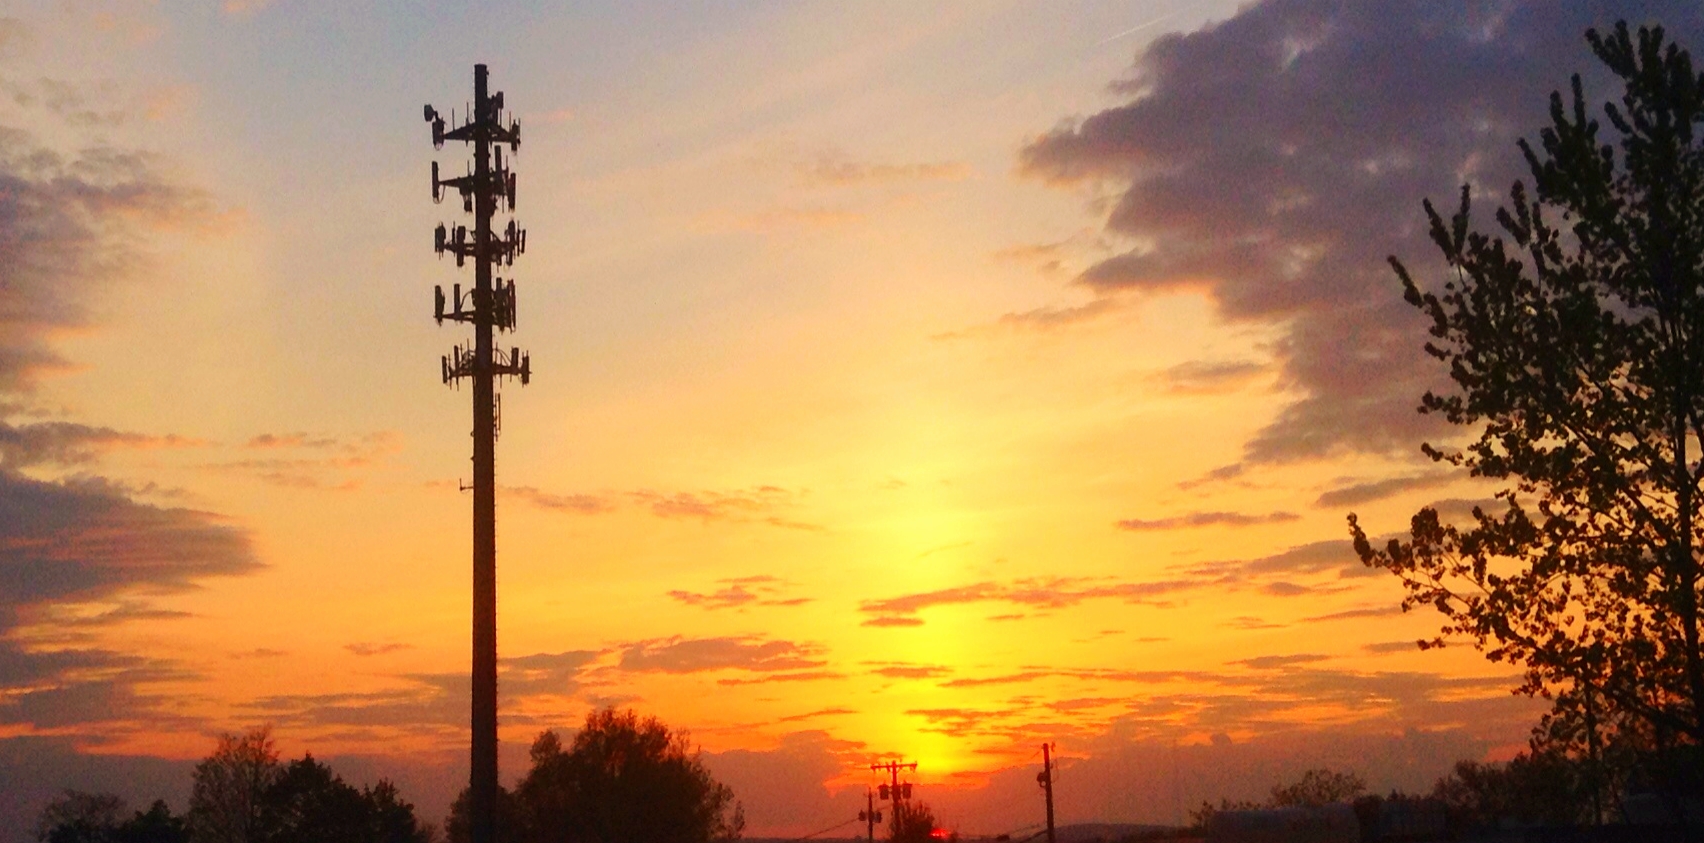 telephone masts near tree and setting sun